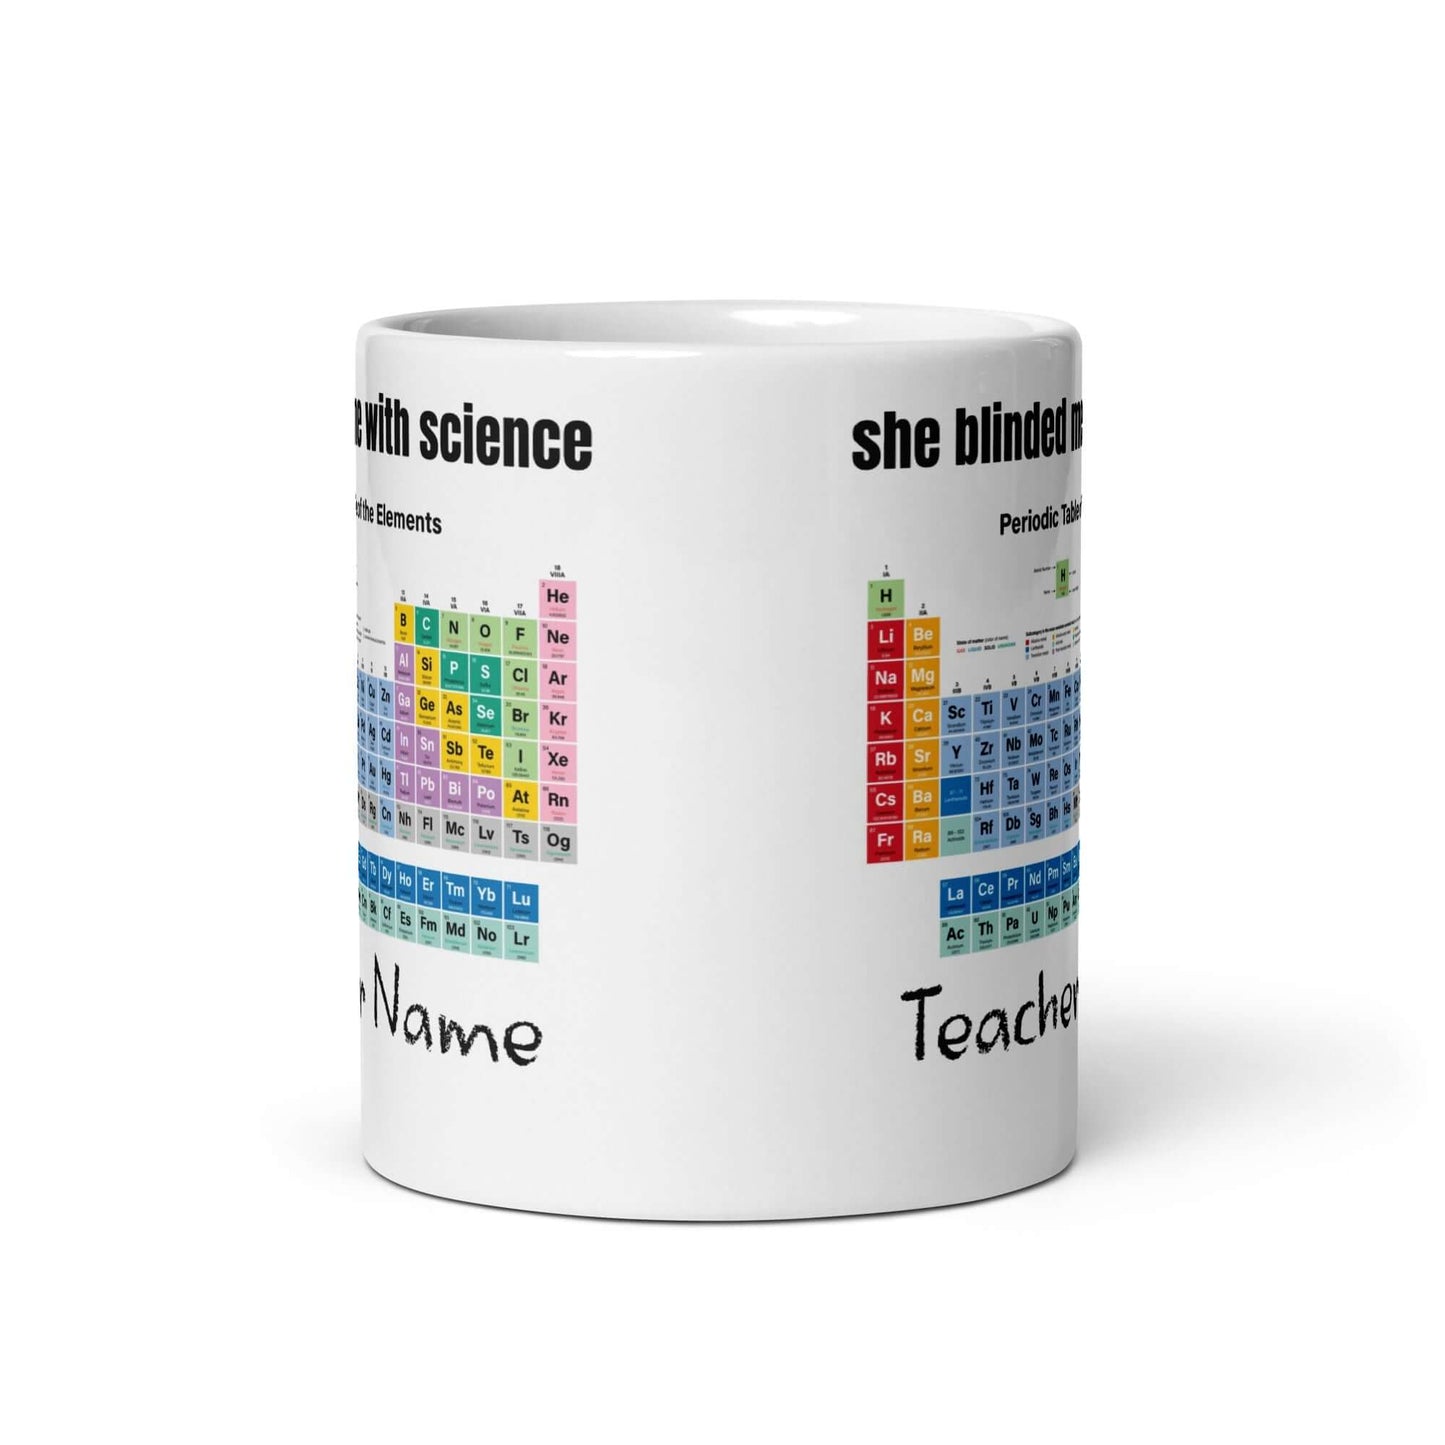 Science Teacher - White glossy mug end of year school school gift science teacher teacher teacher appreciation teacher gift